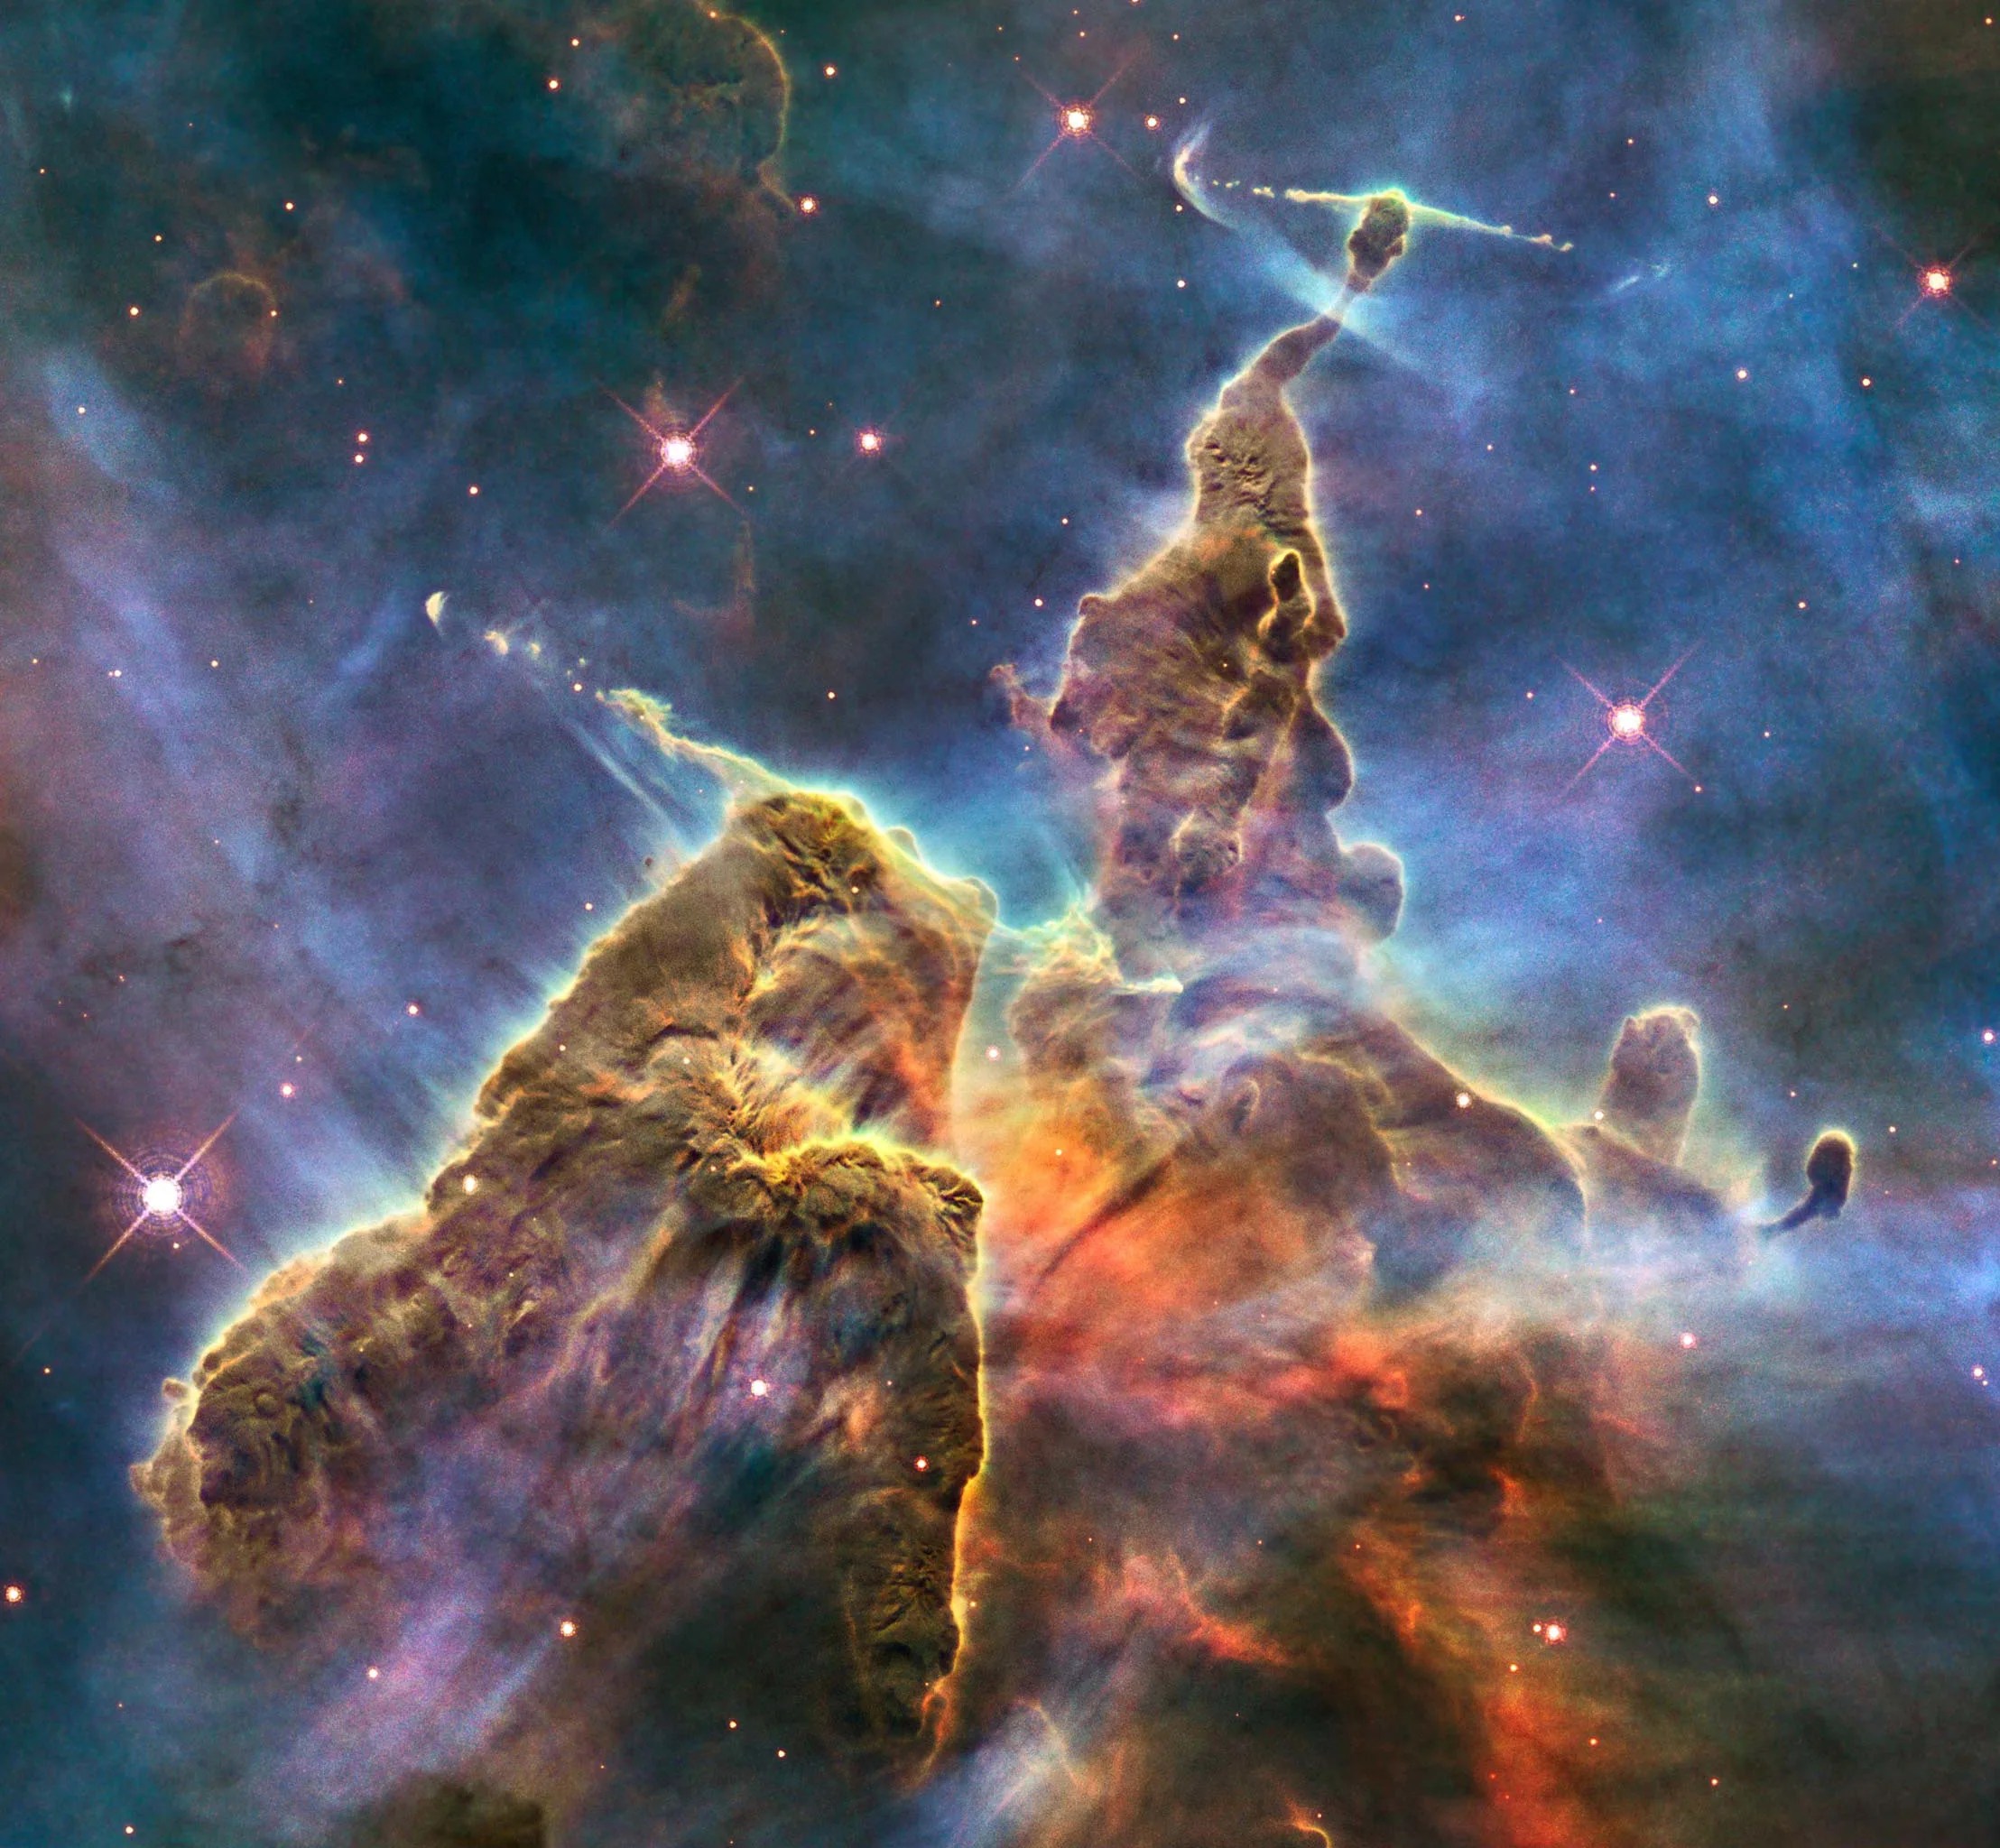 Hubble observations of Carina Nebula section